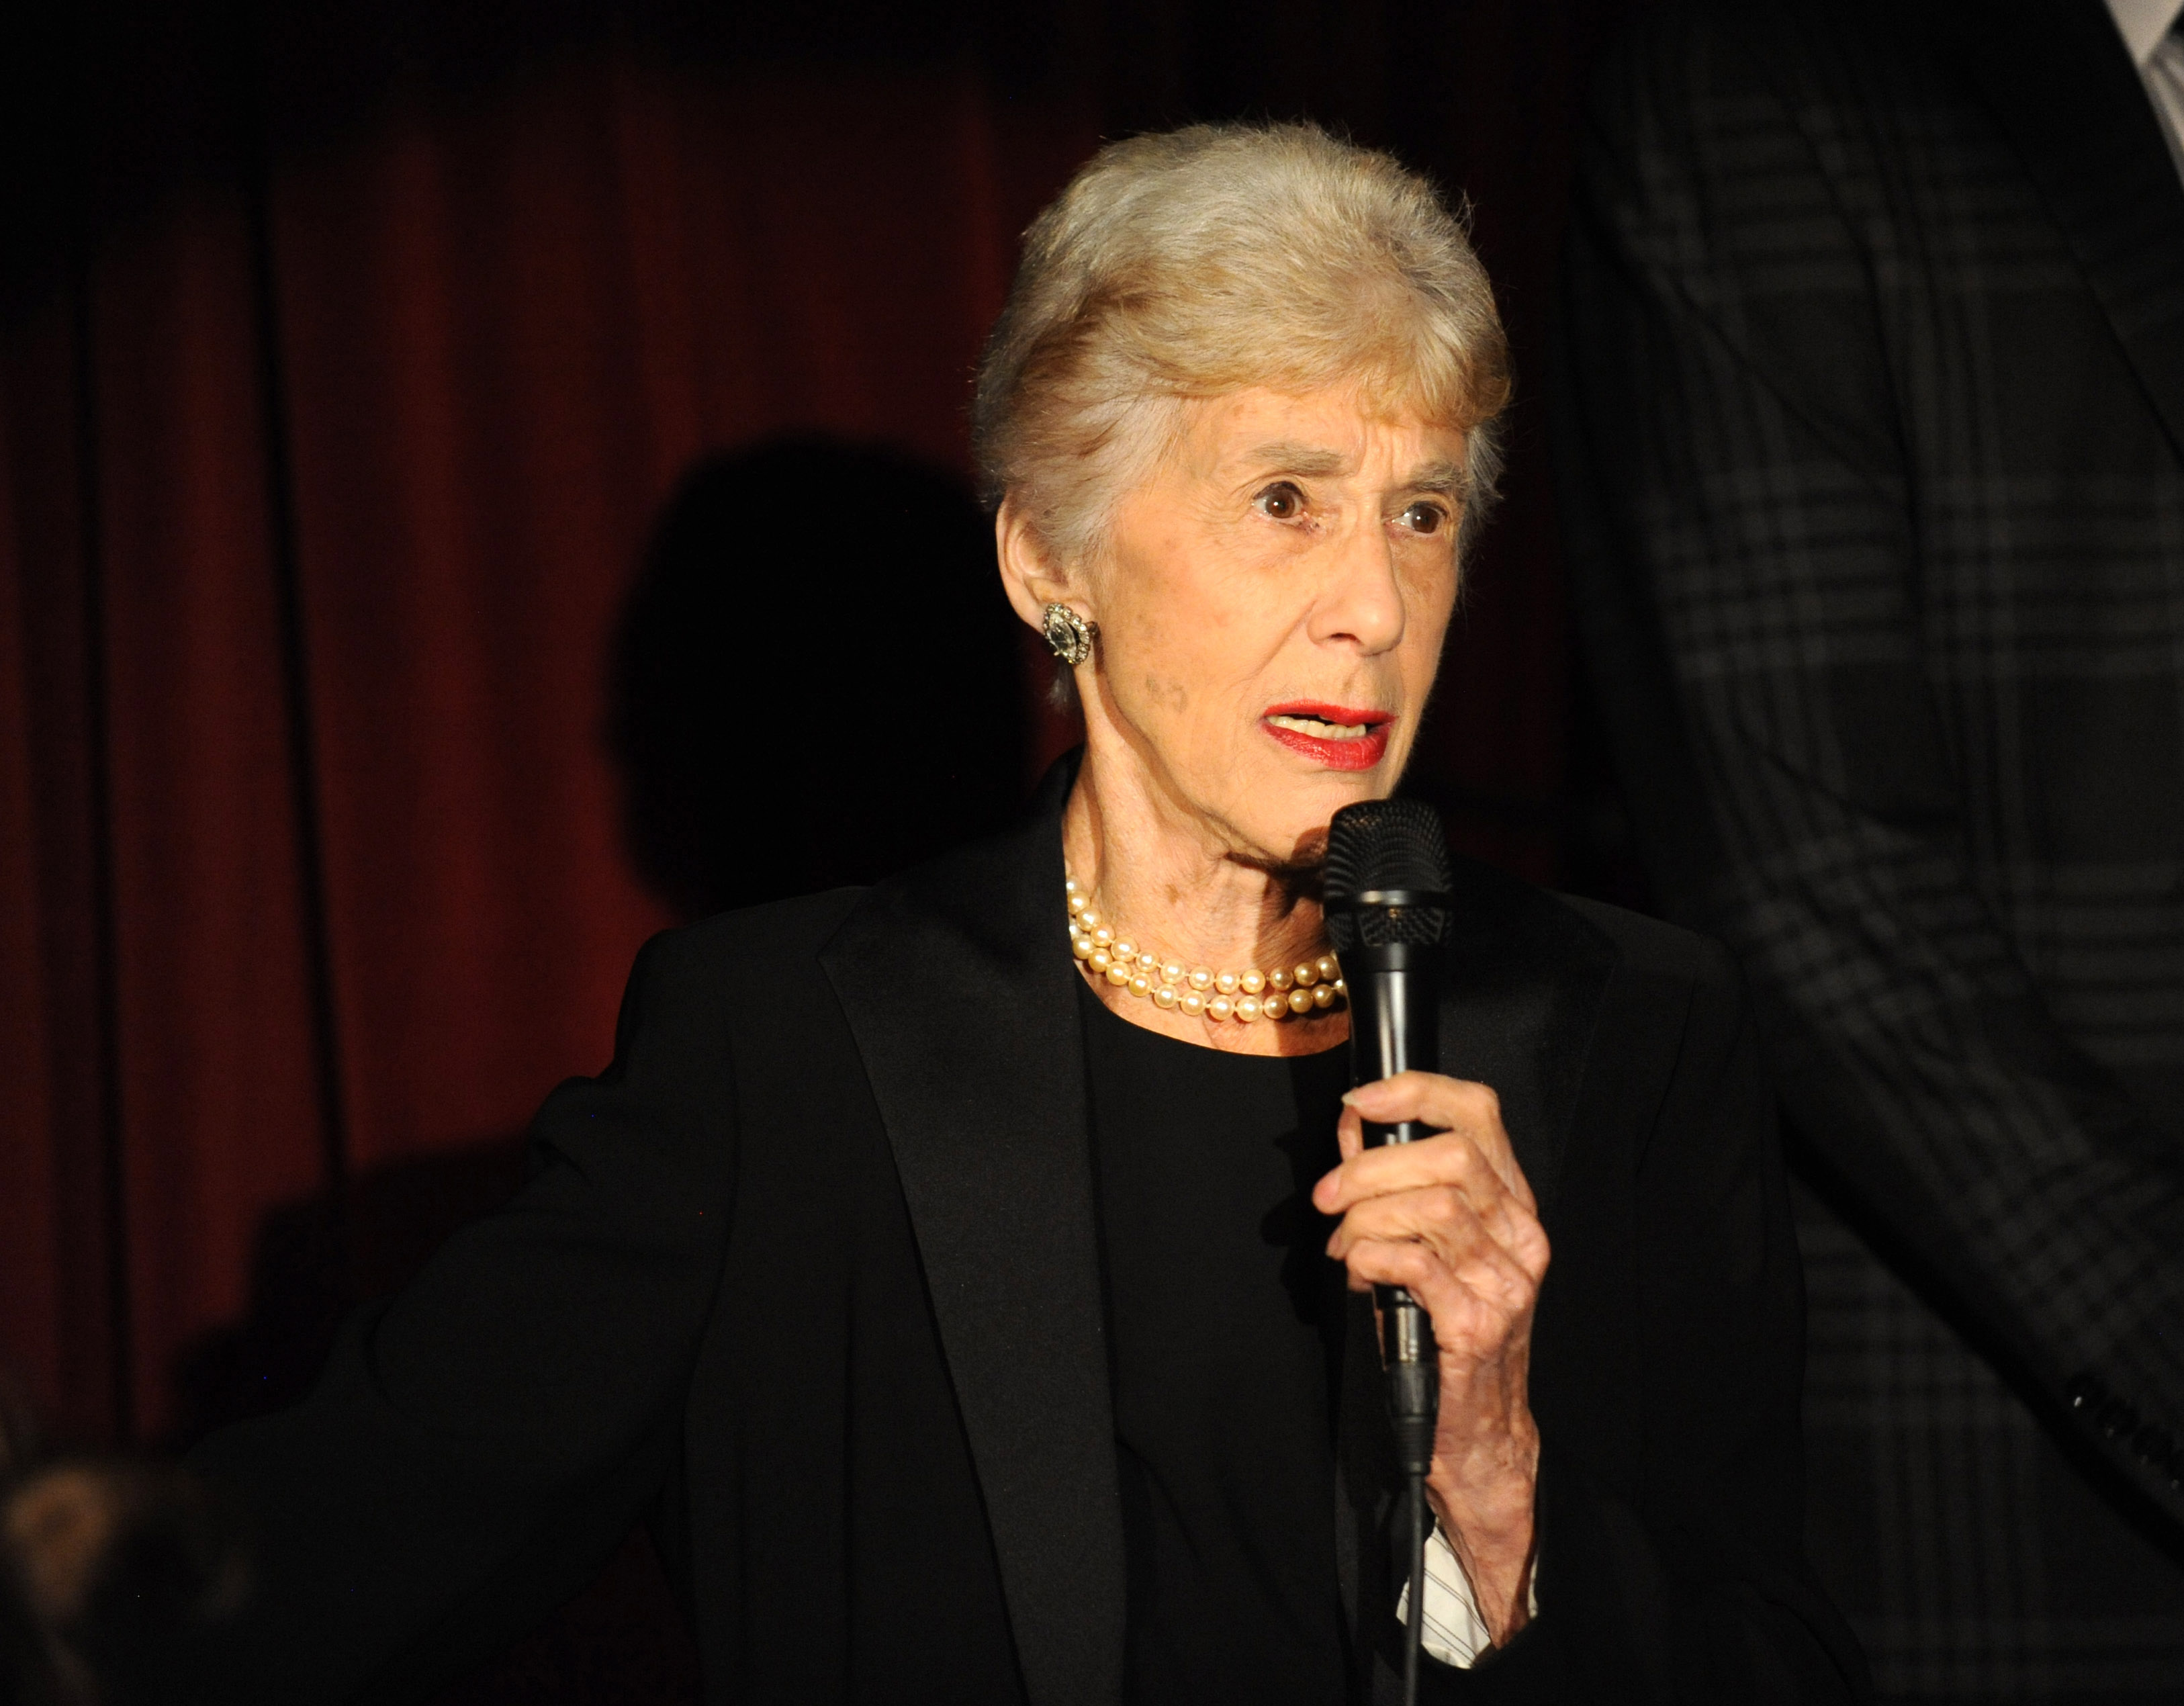 Village Vanguard Owner and NYC Jazz Pioneer Lorraine Gordon Dead at 95